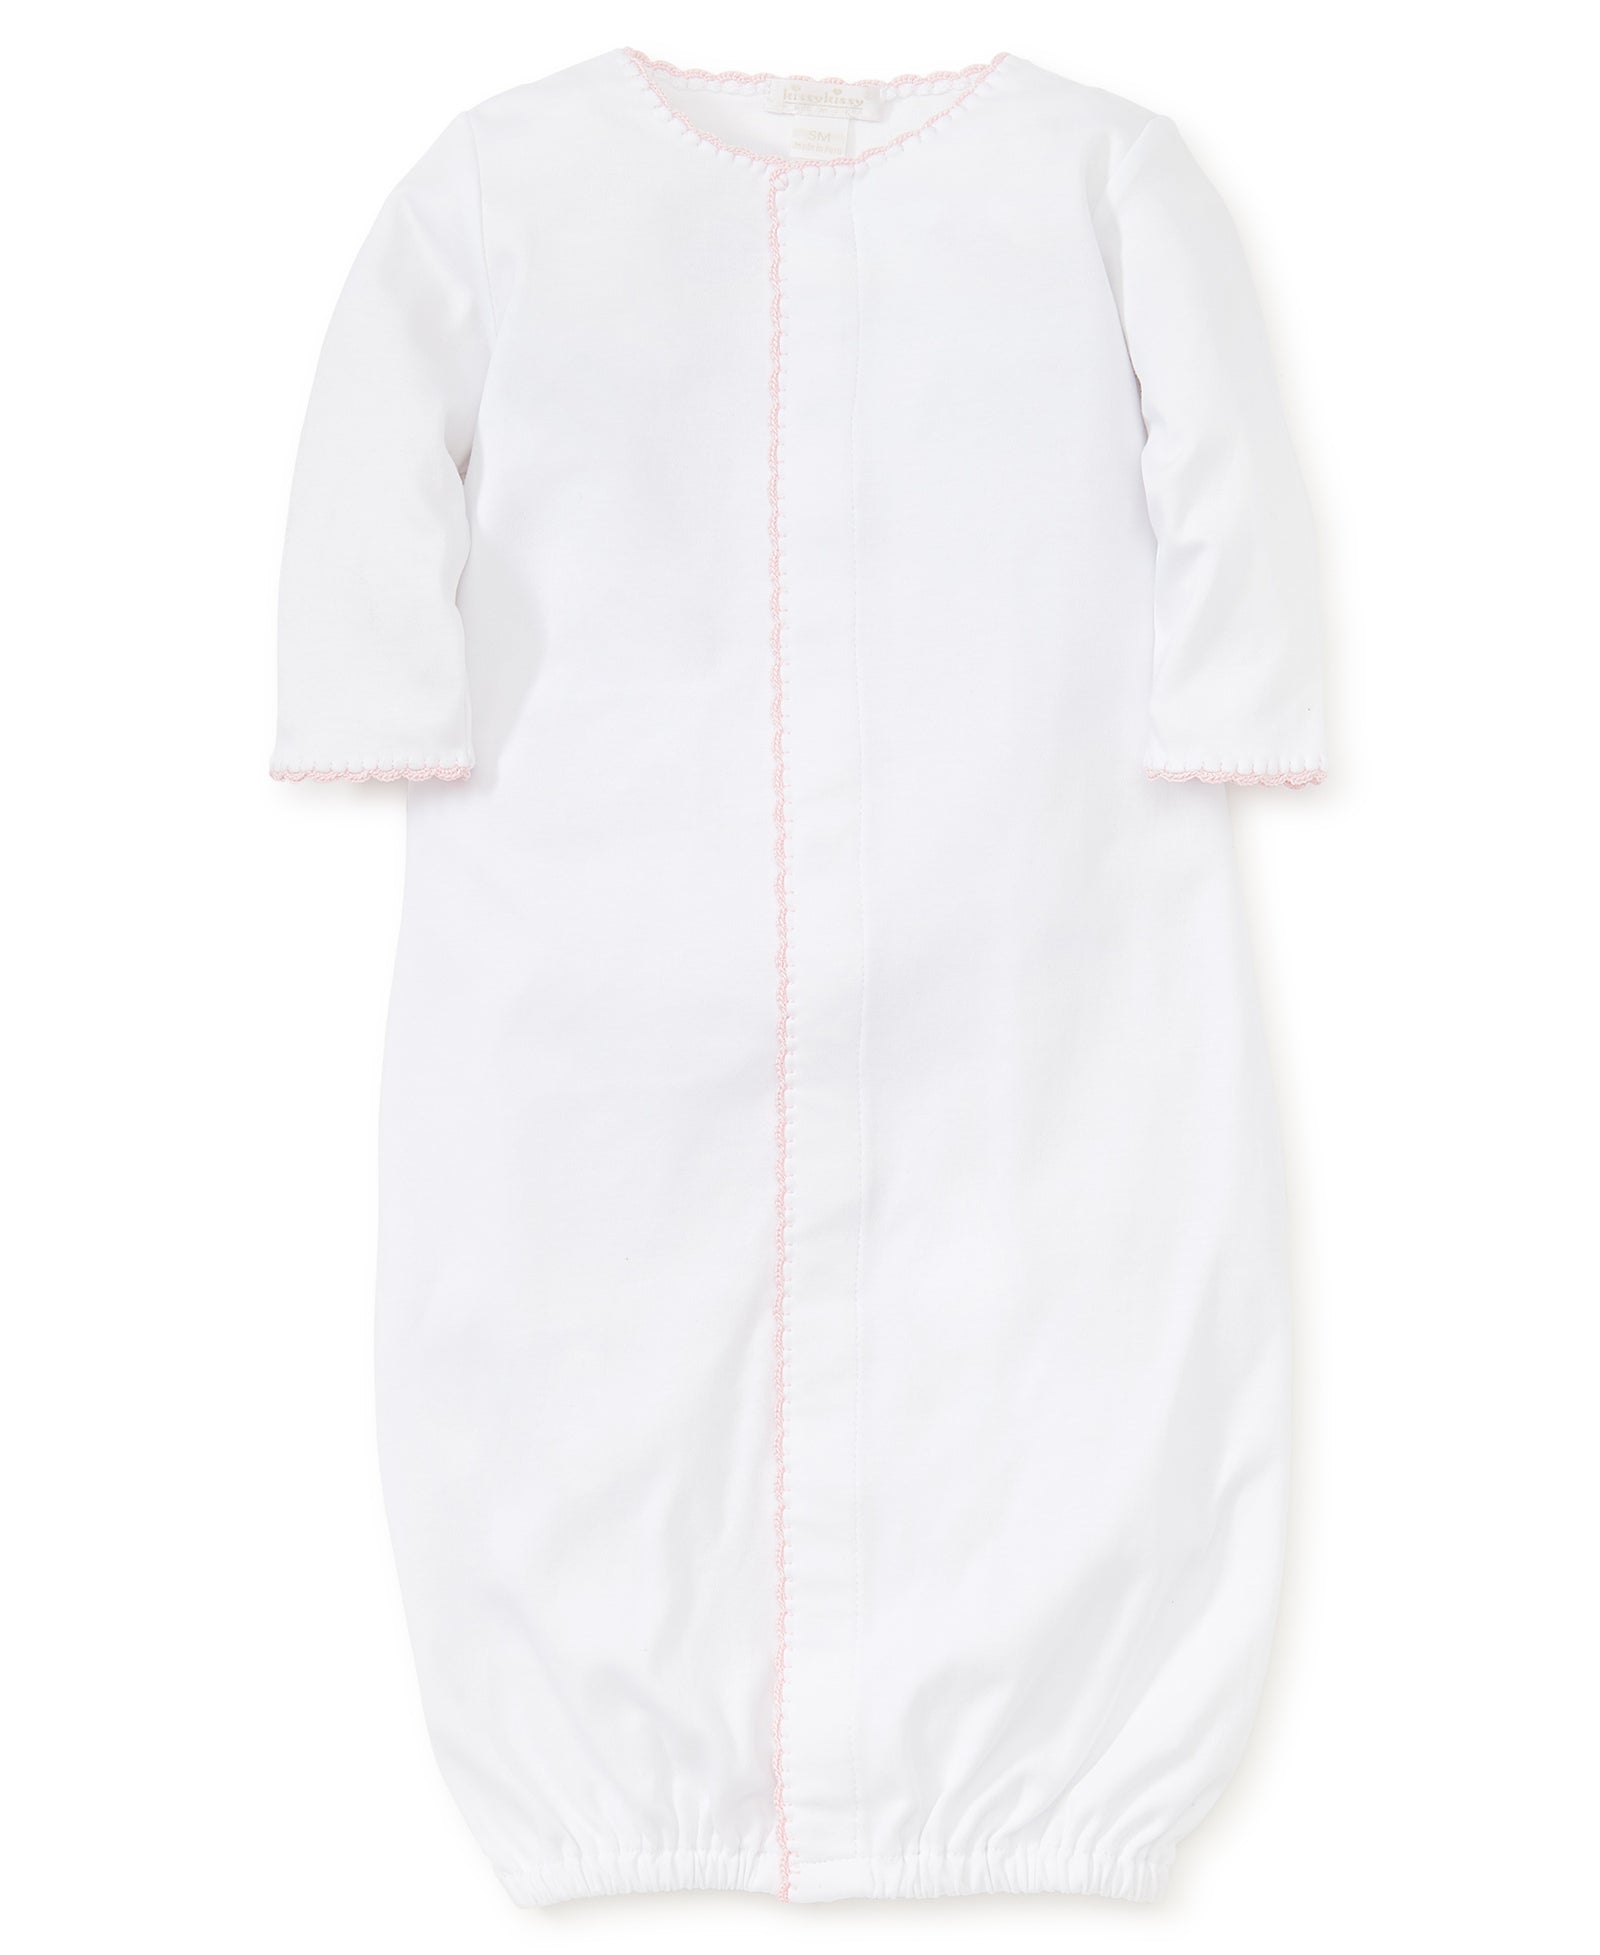 White/Pink New Premier Basics Converter Gown